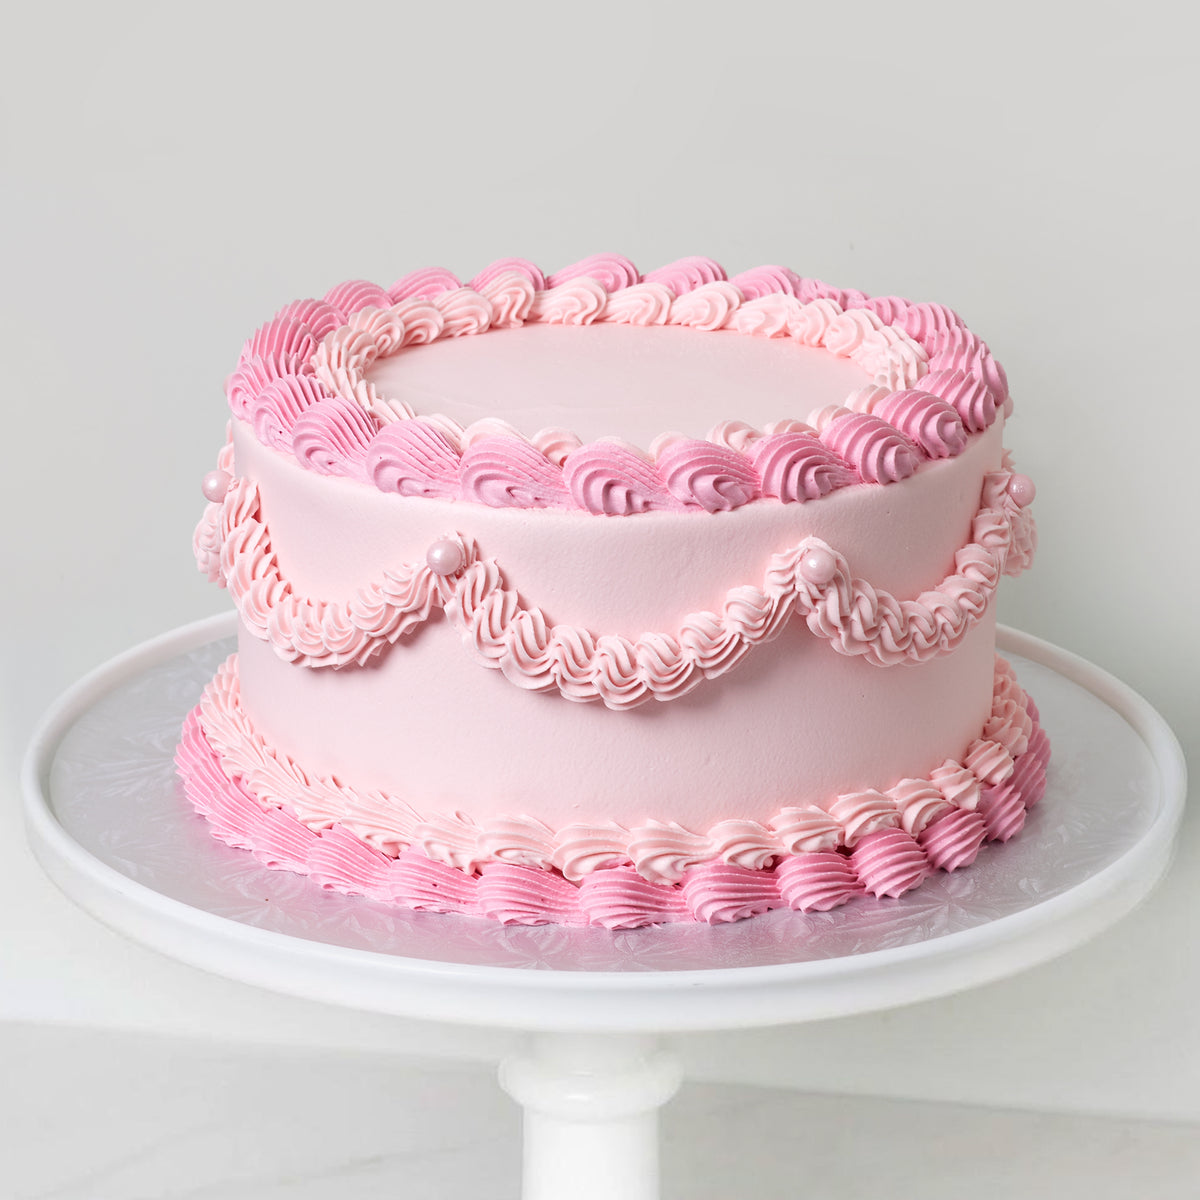 DIY Wedding Cakes to Impress - Eat Well Recipe - NZ Herald